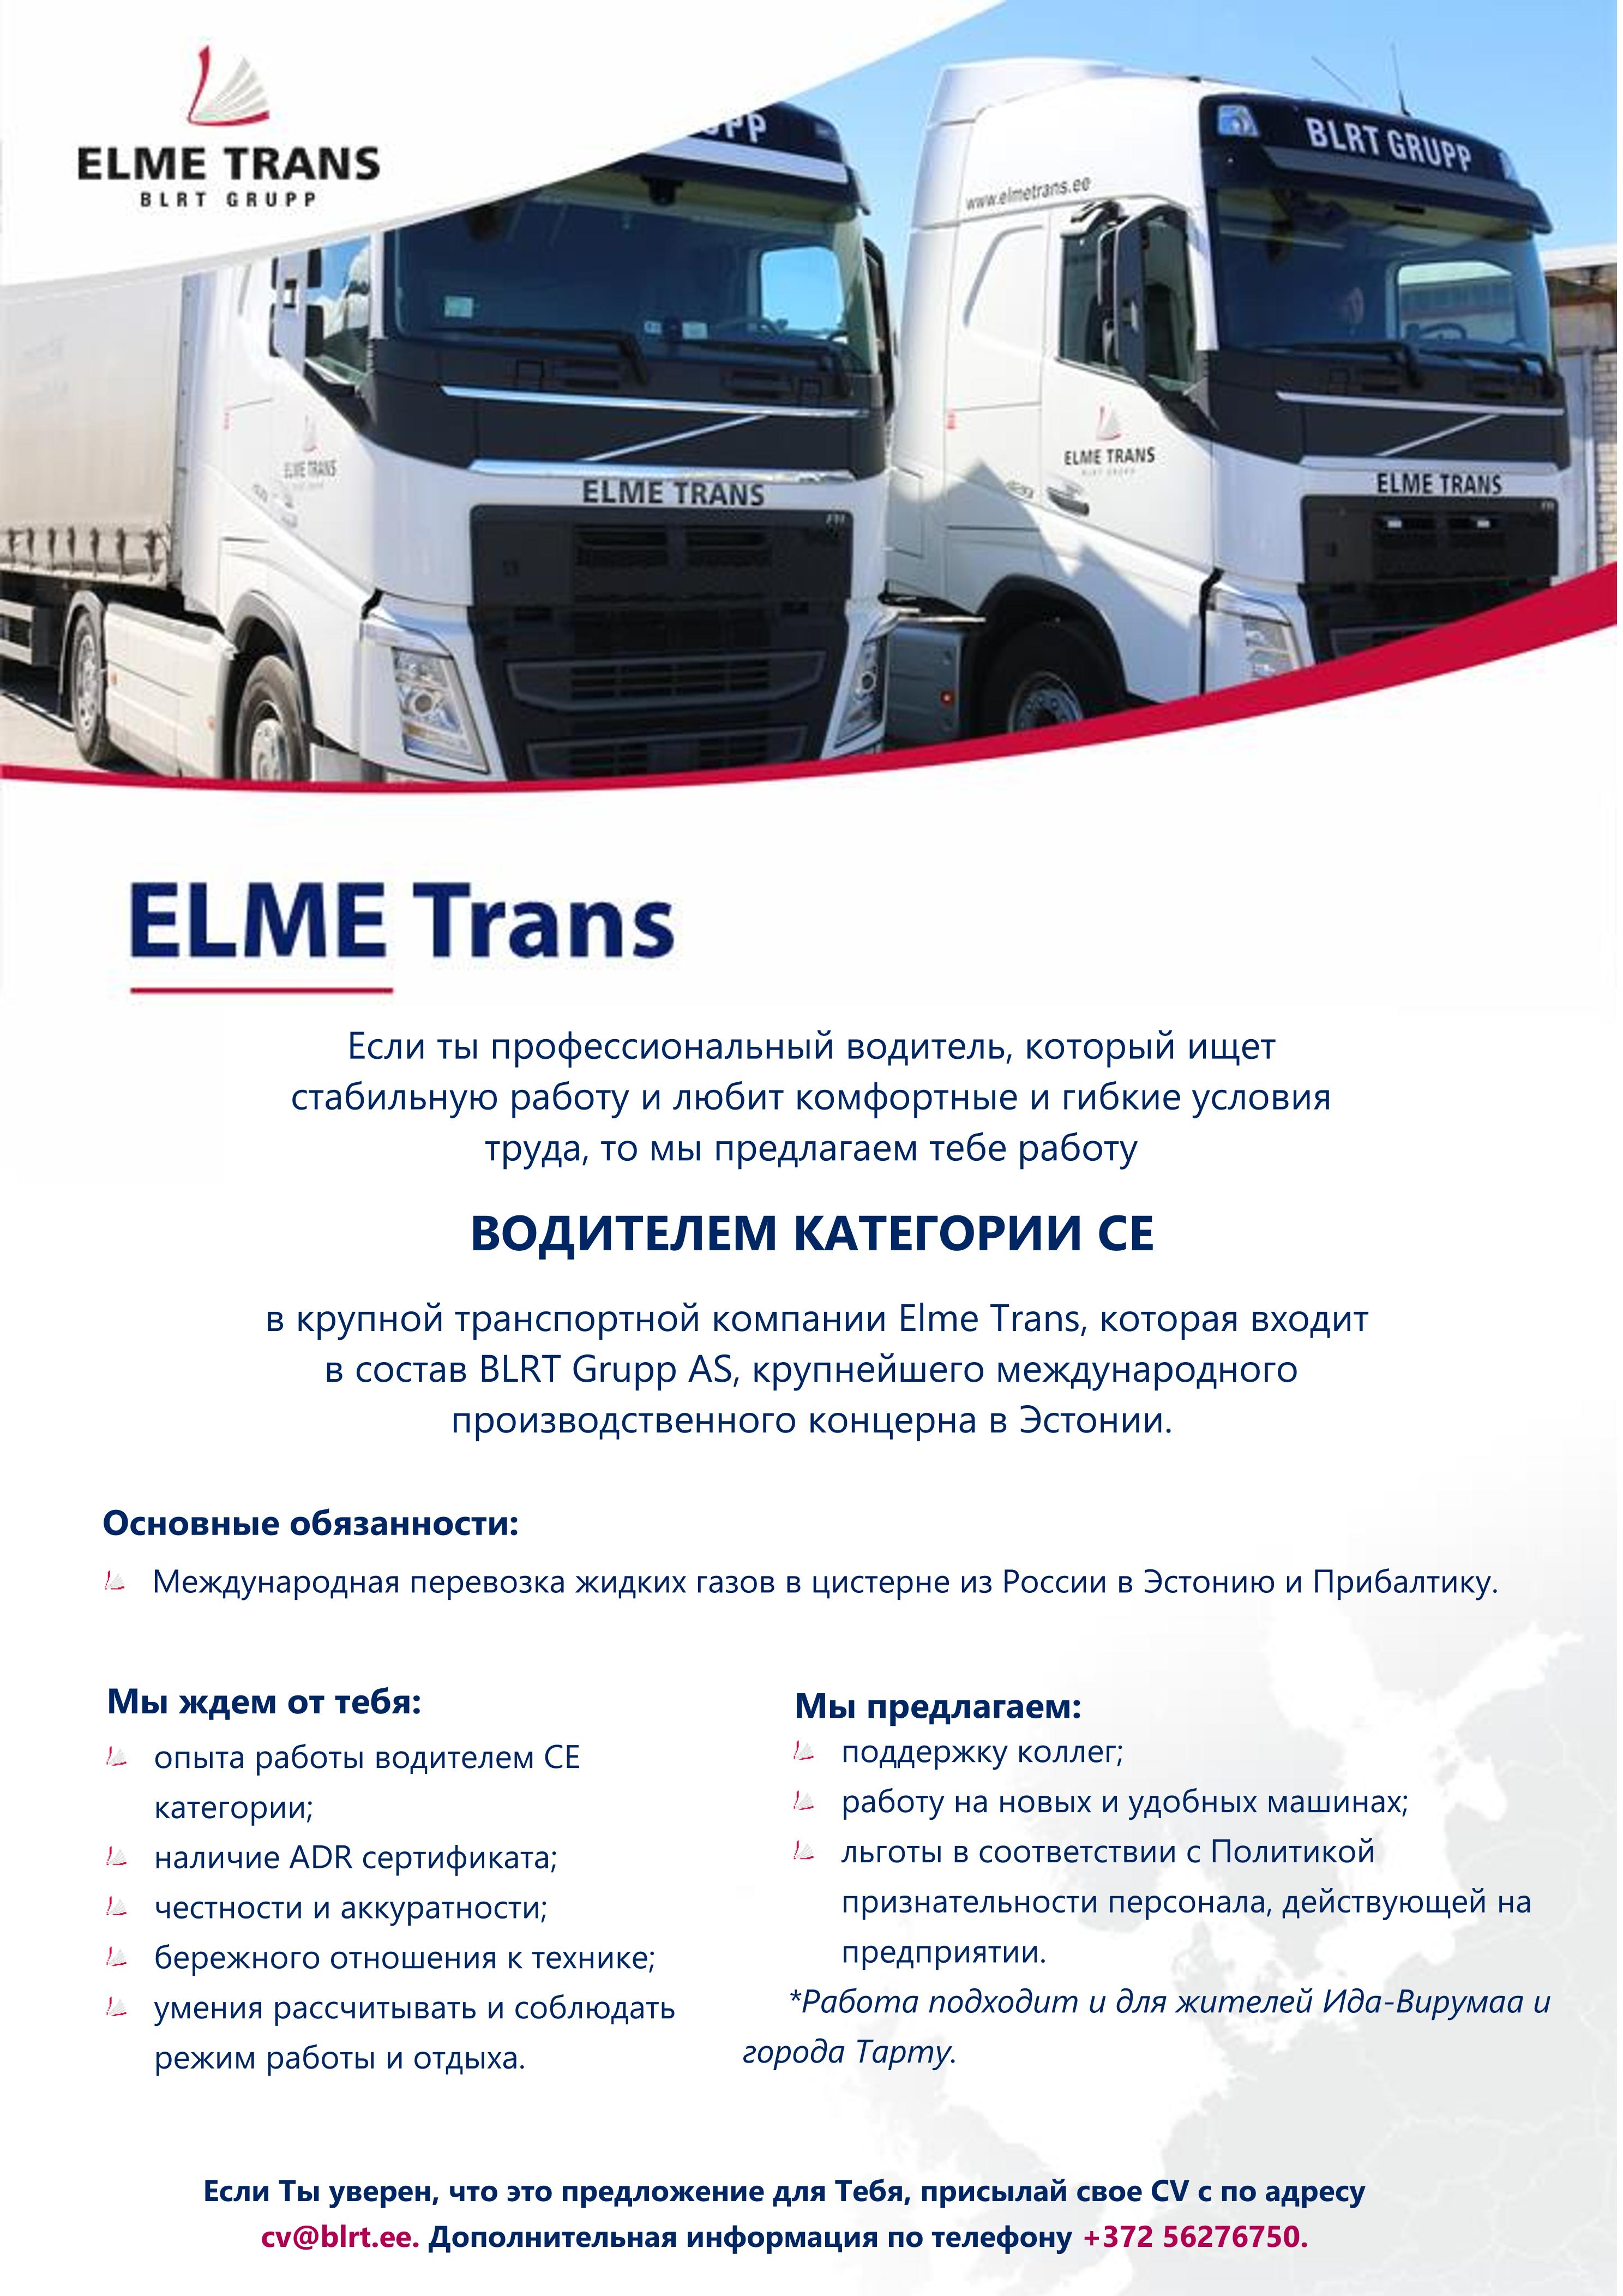 ELME Trans Veoautojuht / водитель грузовика (CE + ADR)